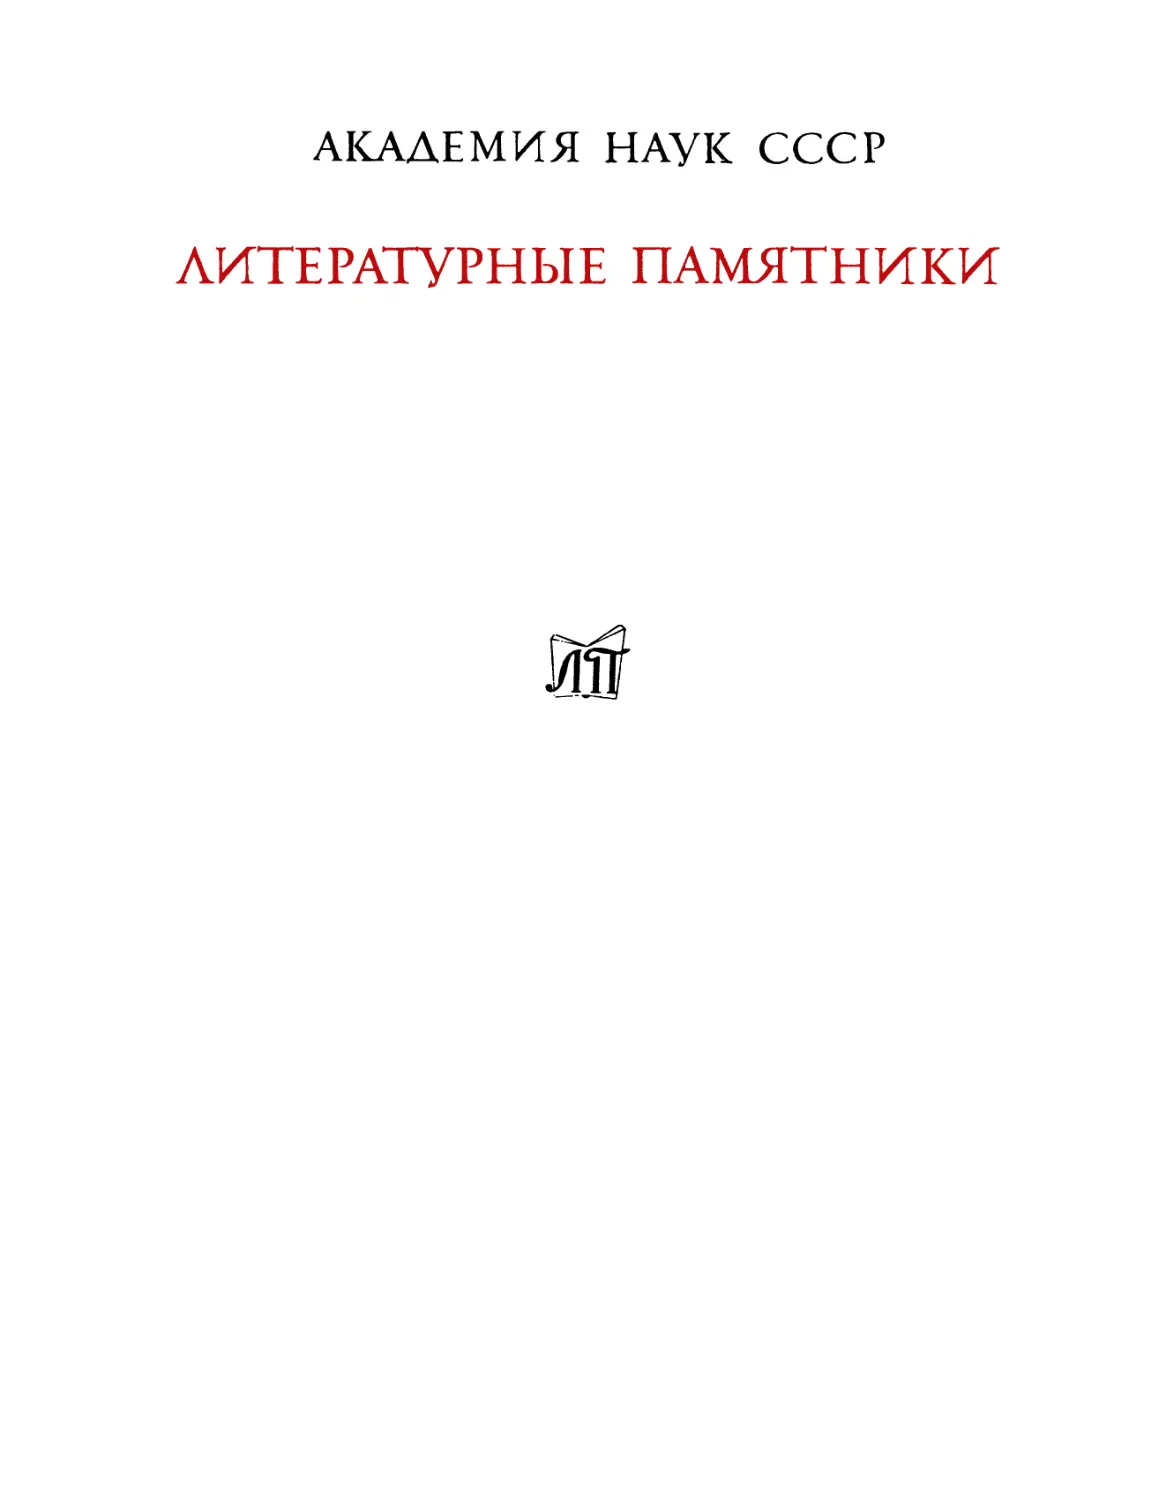 П. В. Анненков. Парижские письма – 1983